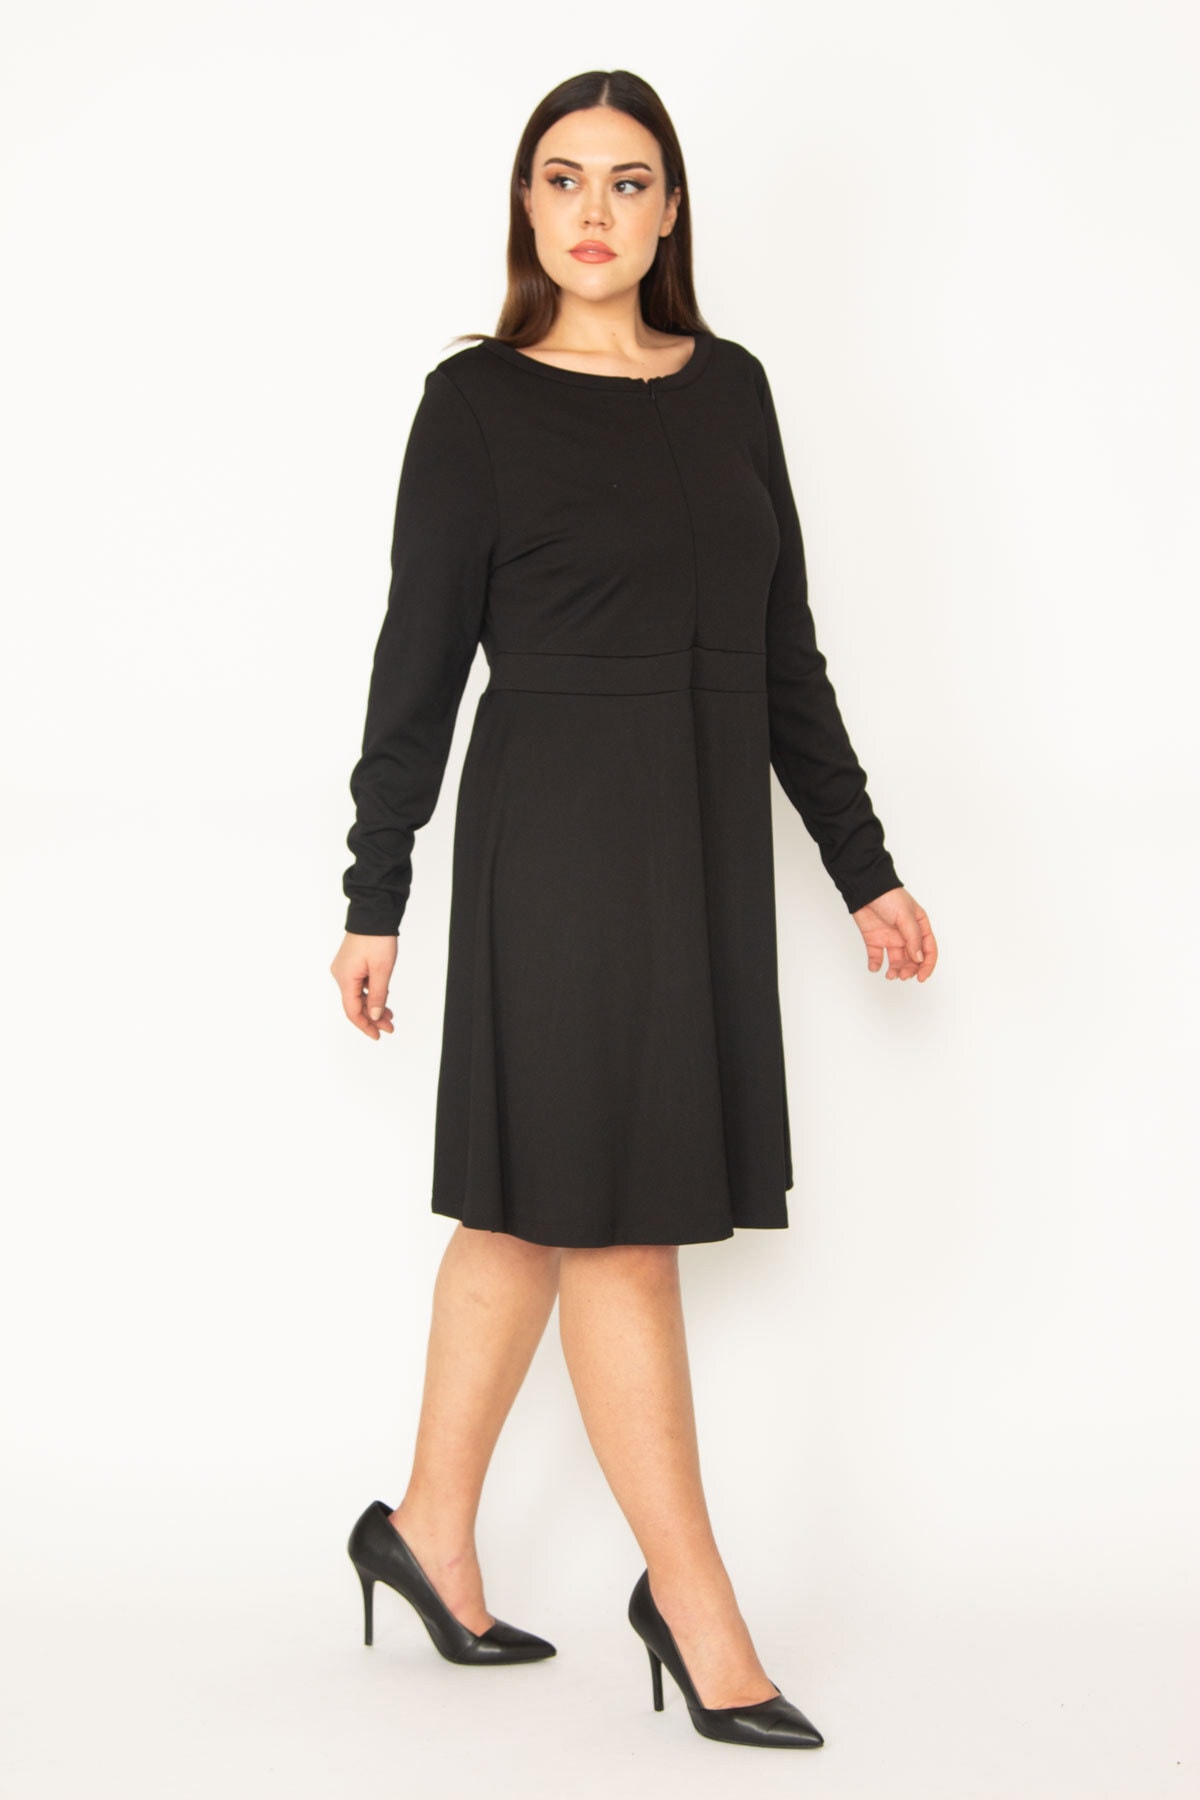 Şans Women's Plus Size Black Front Zippered Waistband Dress